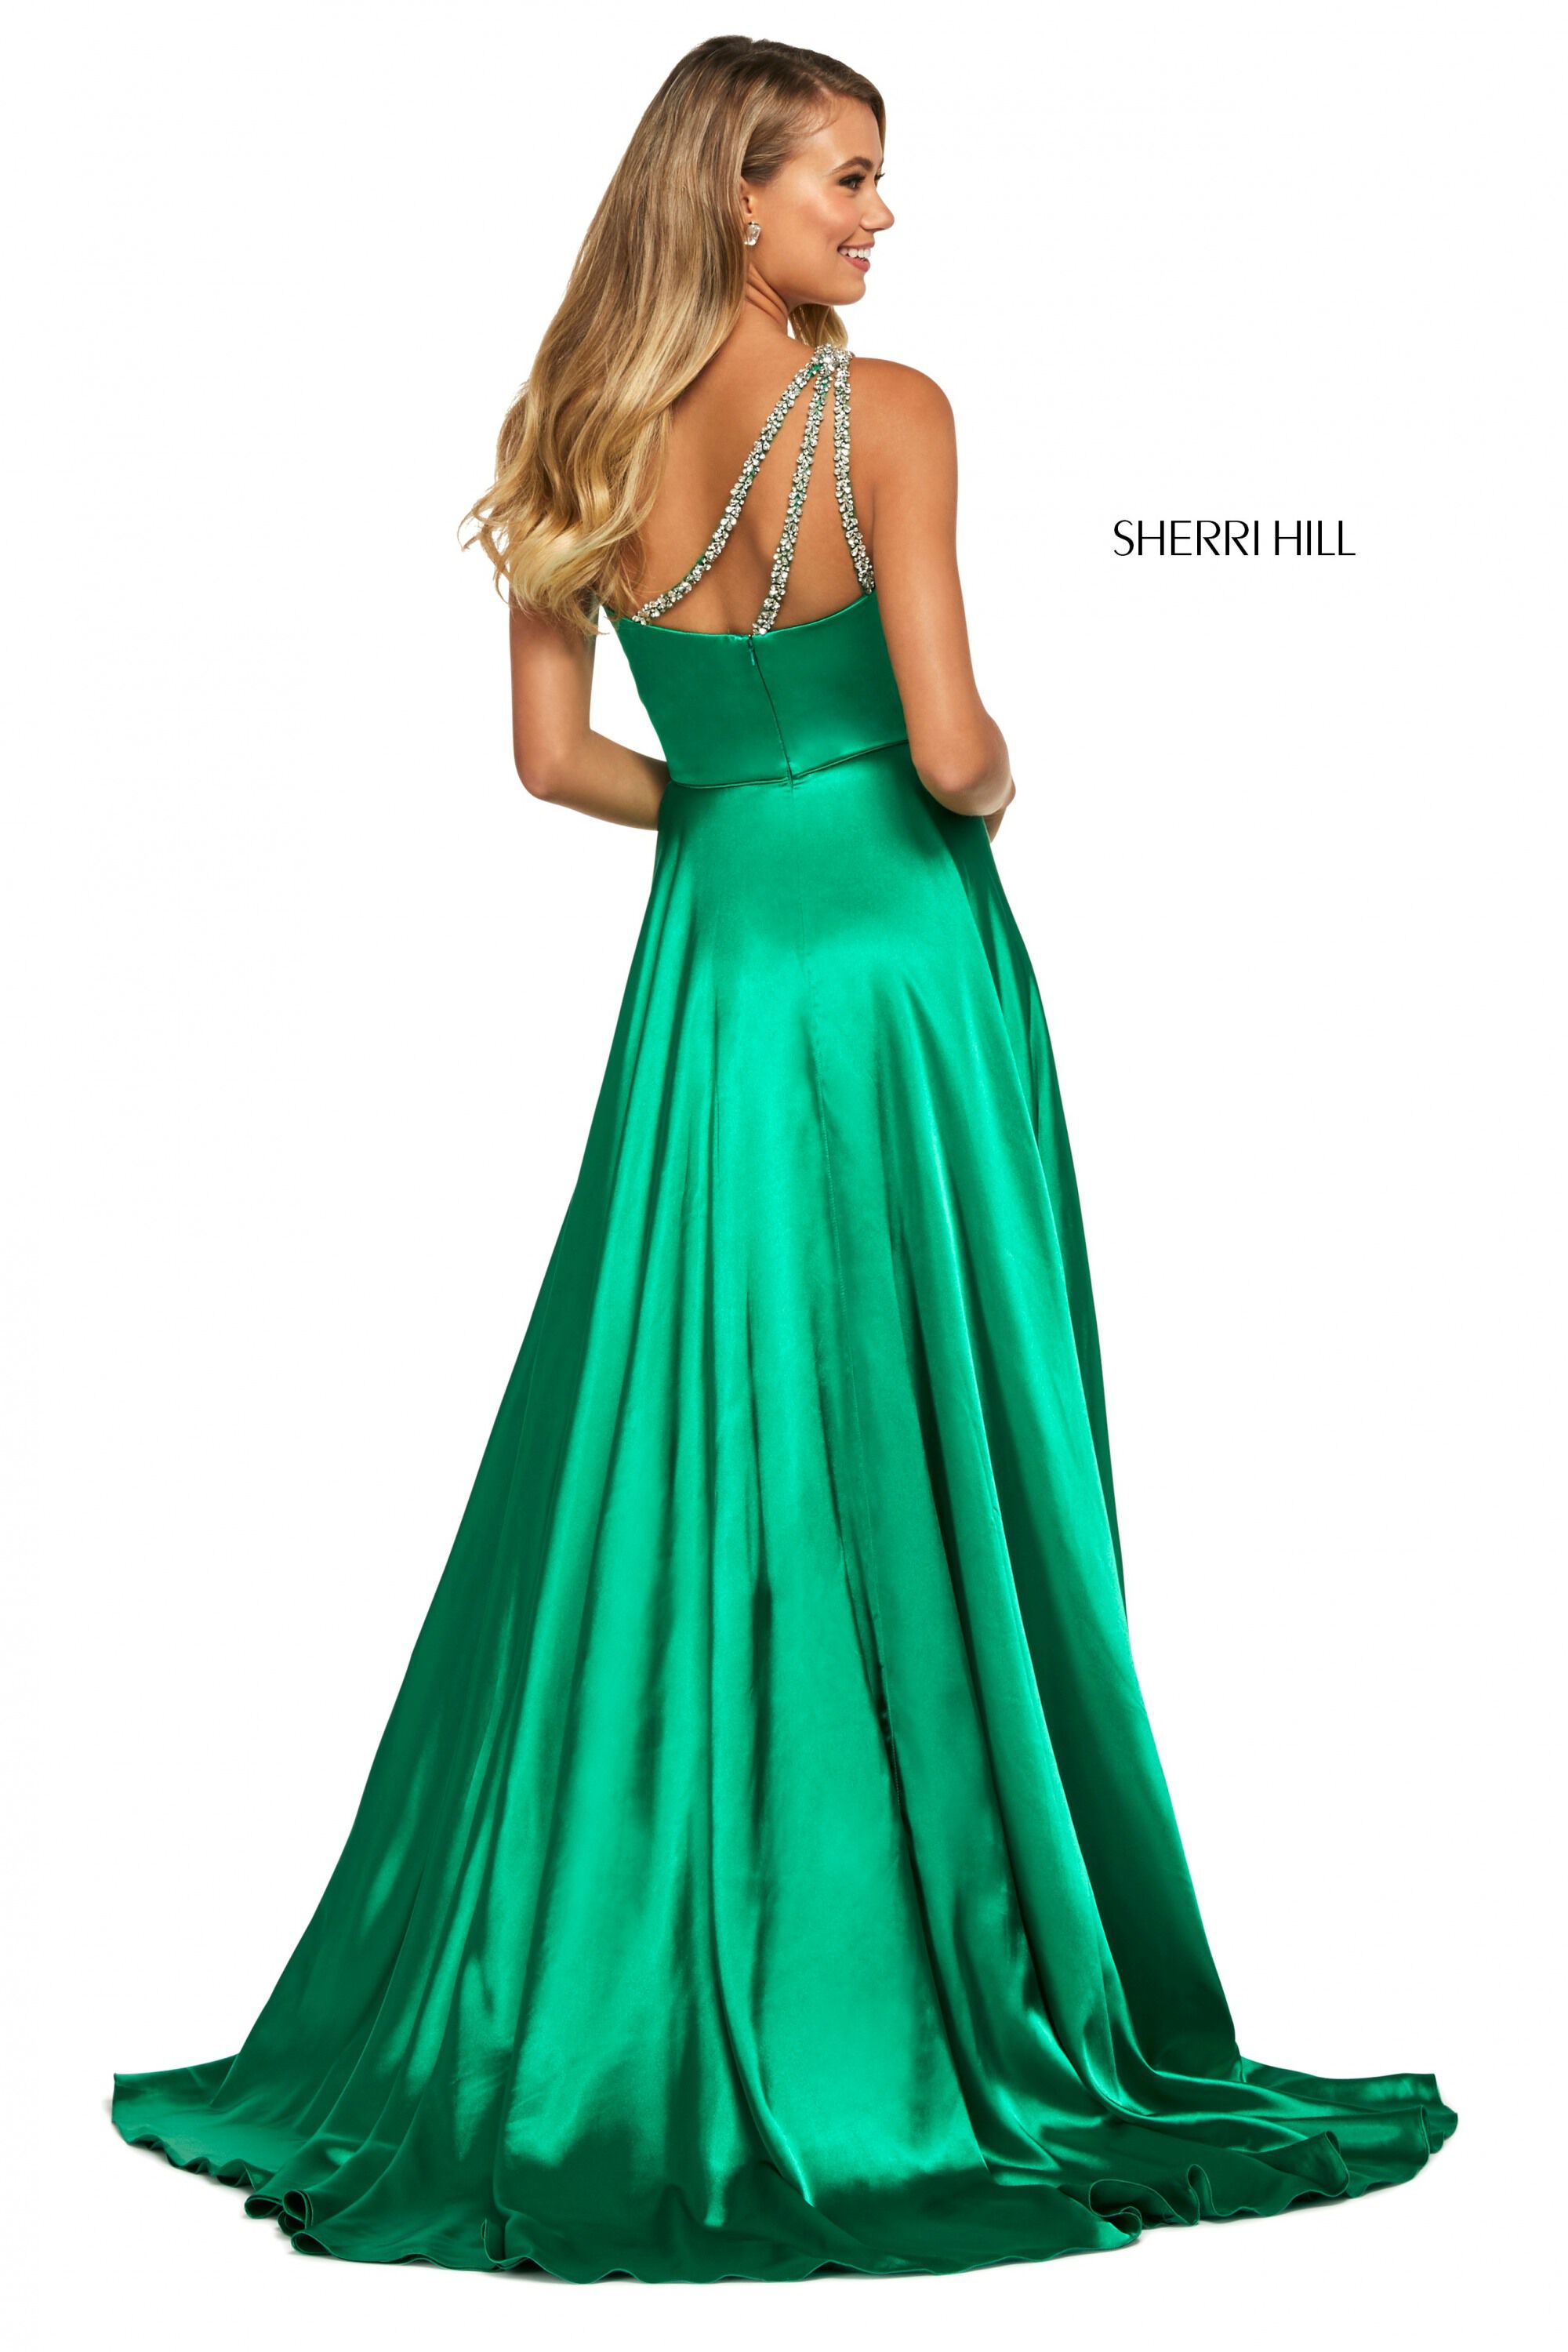 sherri hill emerald dress